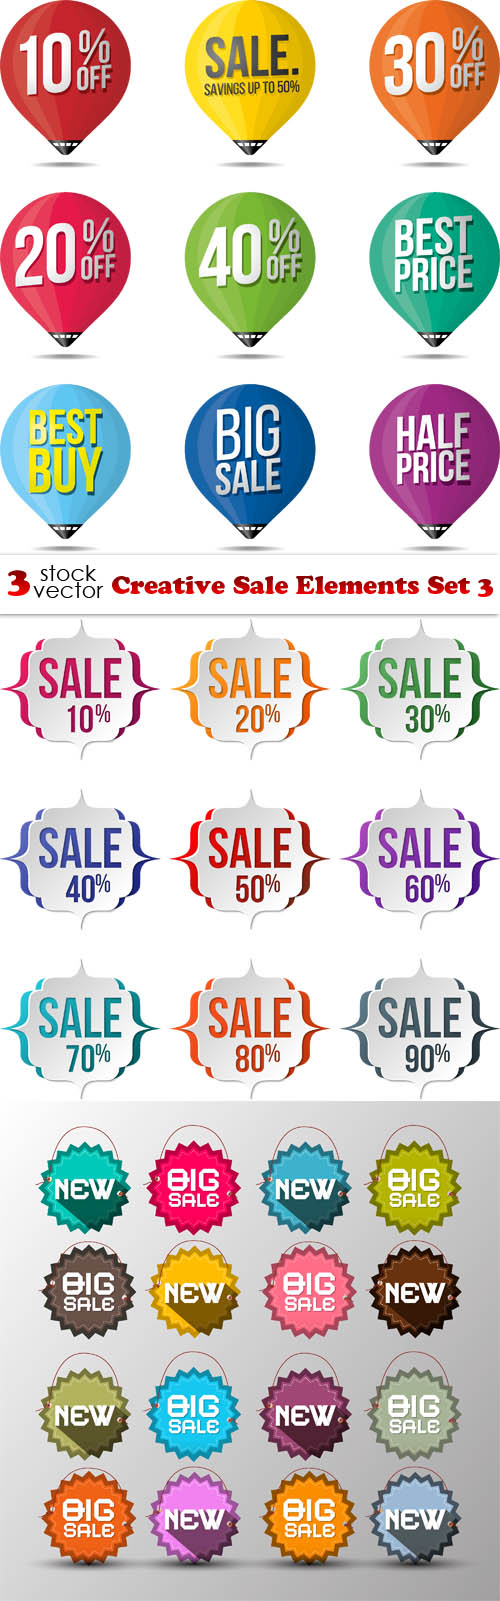 Vectors - Creative Sale Elements Set 3